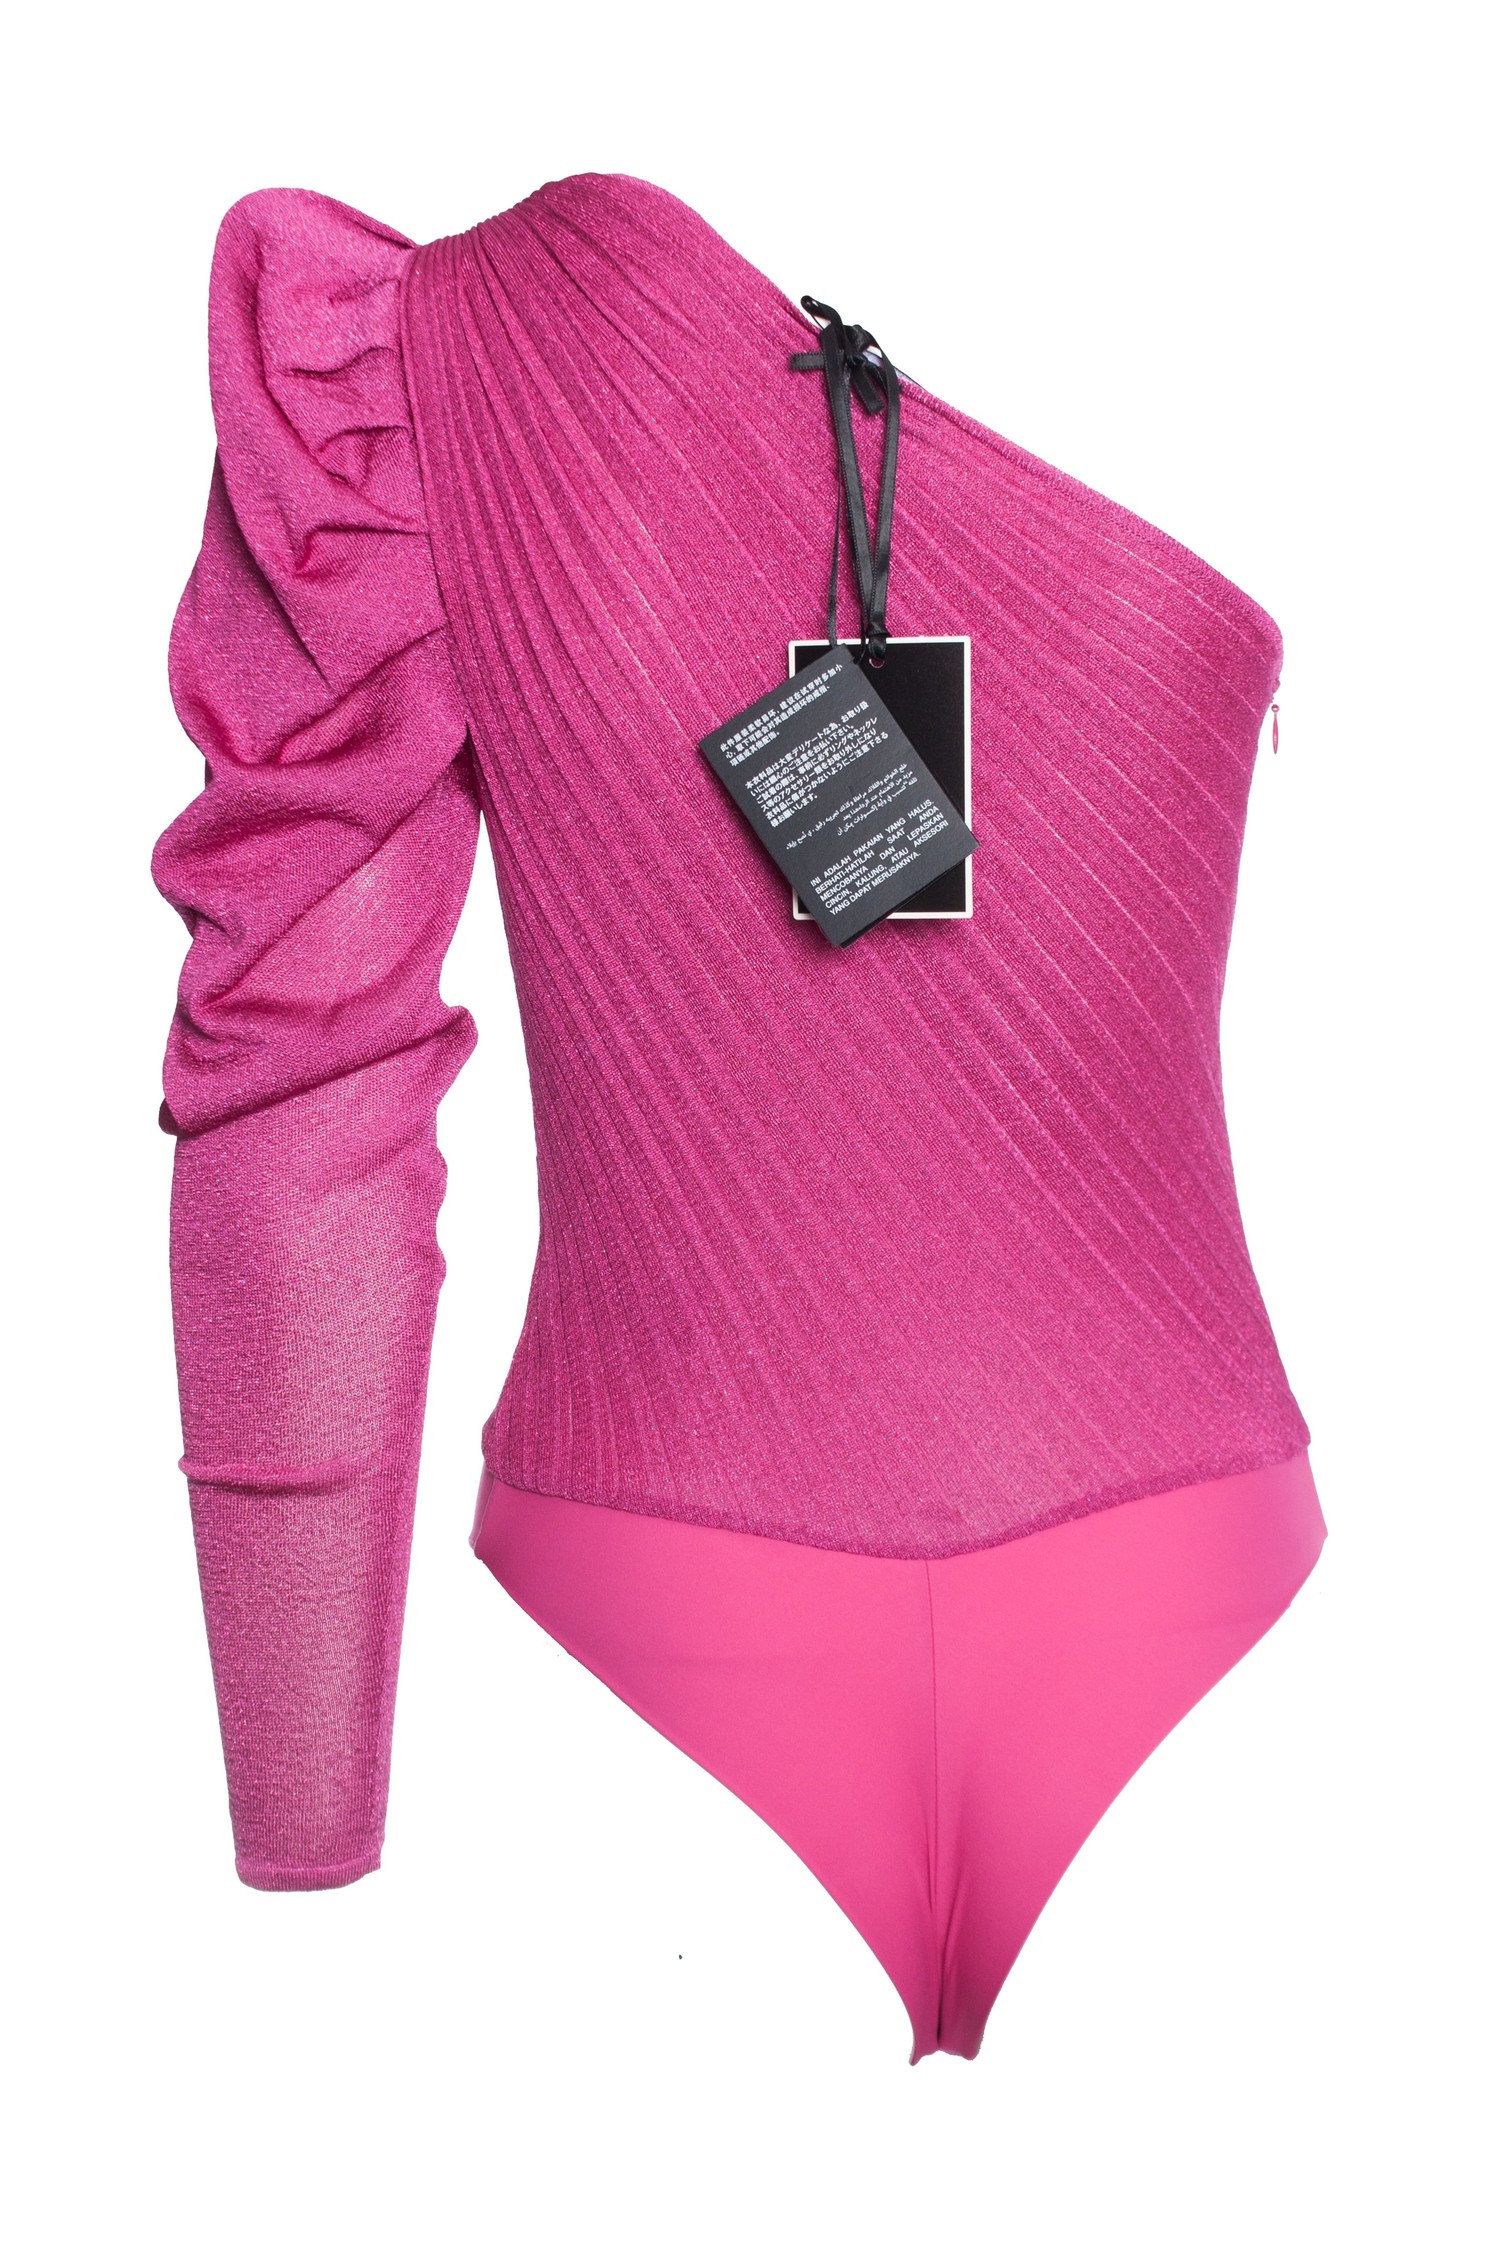 Moeras eigendom kopen Elisabetta Franchi, roze lurex bodysuit met één schouder. - Unique Designer  Pieces